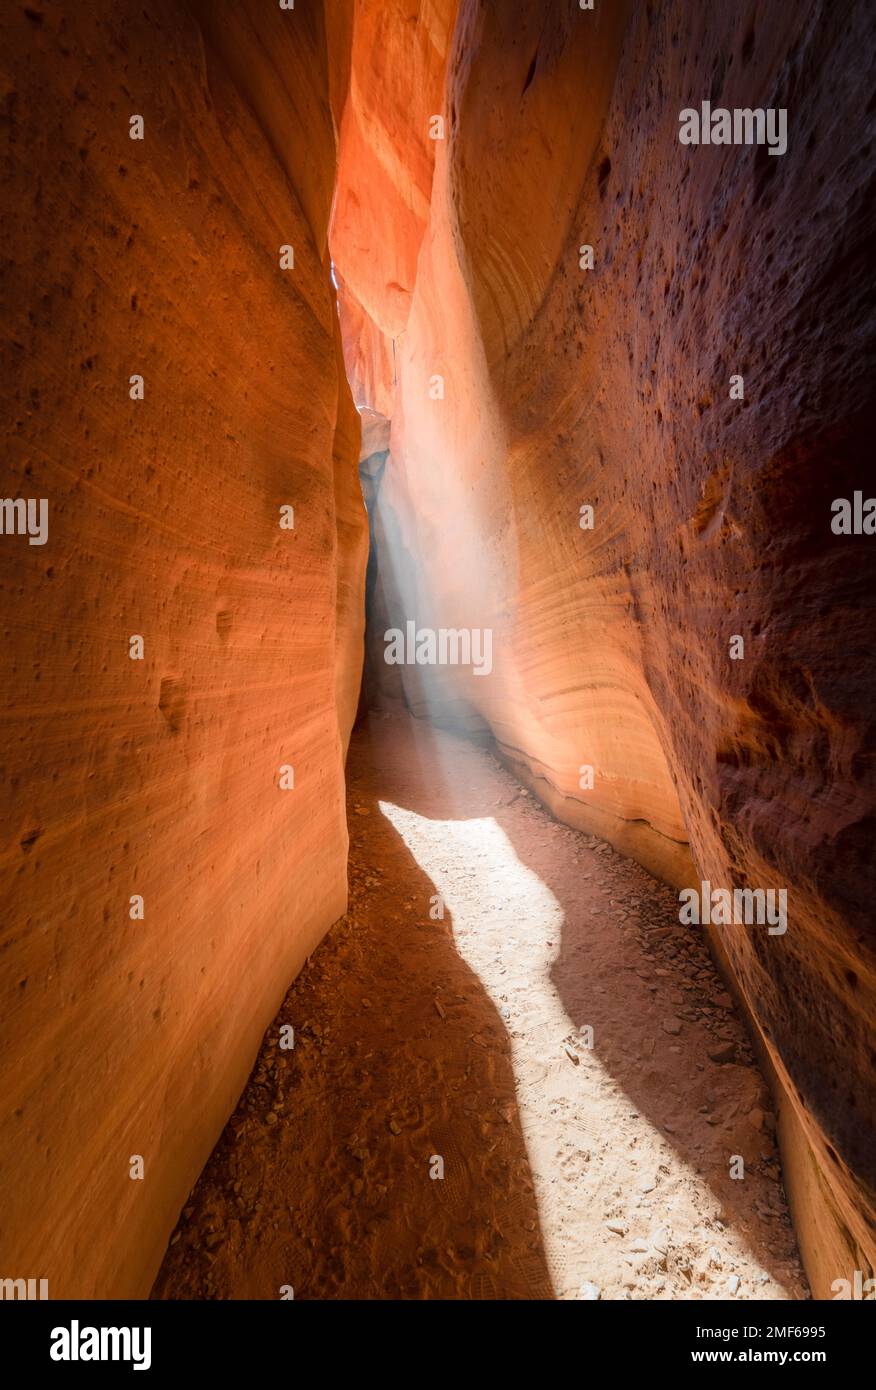 Southwest Nature Utah Outdoor AdventurePhotography Exploration in the Swirl of Sandstone in Peekaboo Slot Canyon Stock Photo